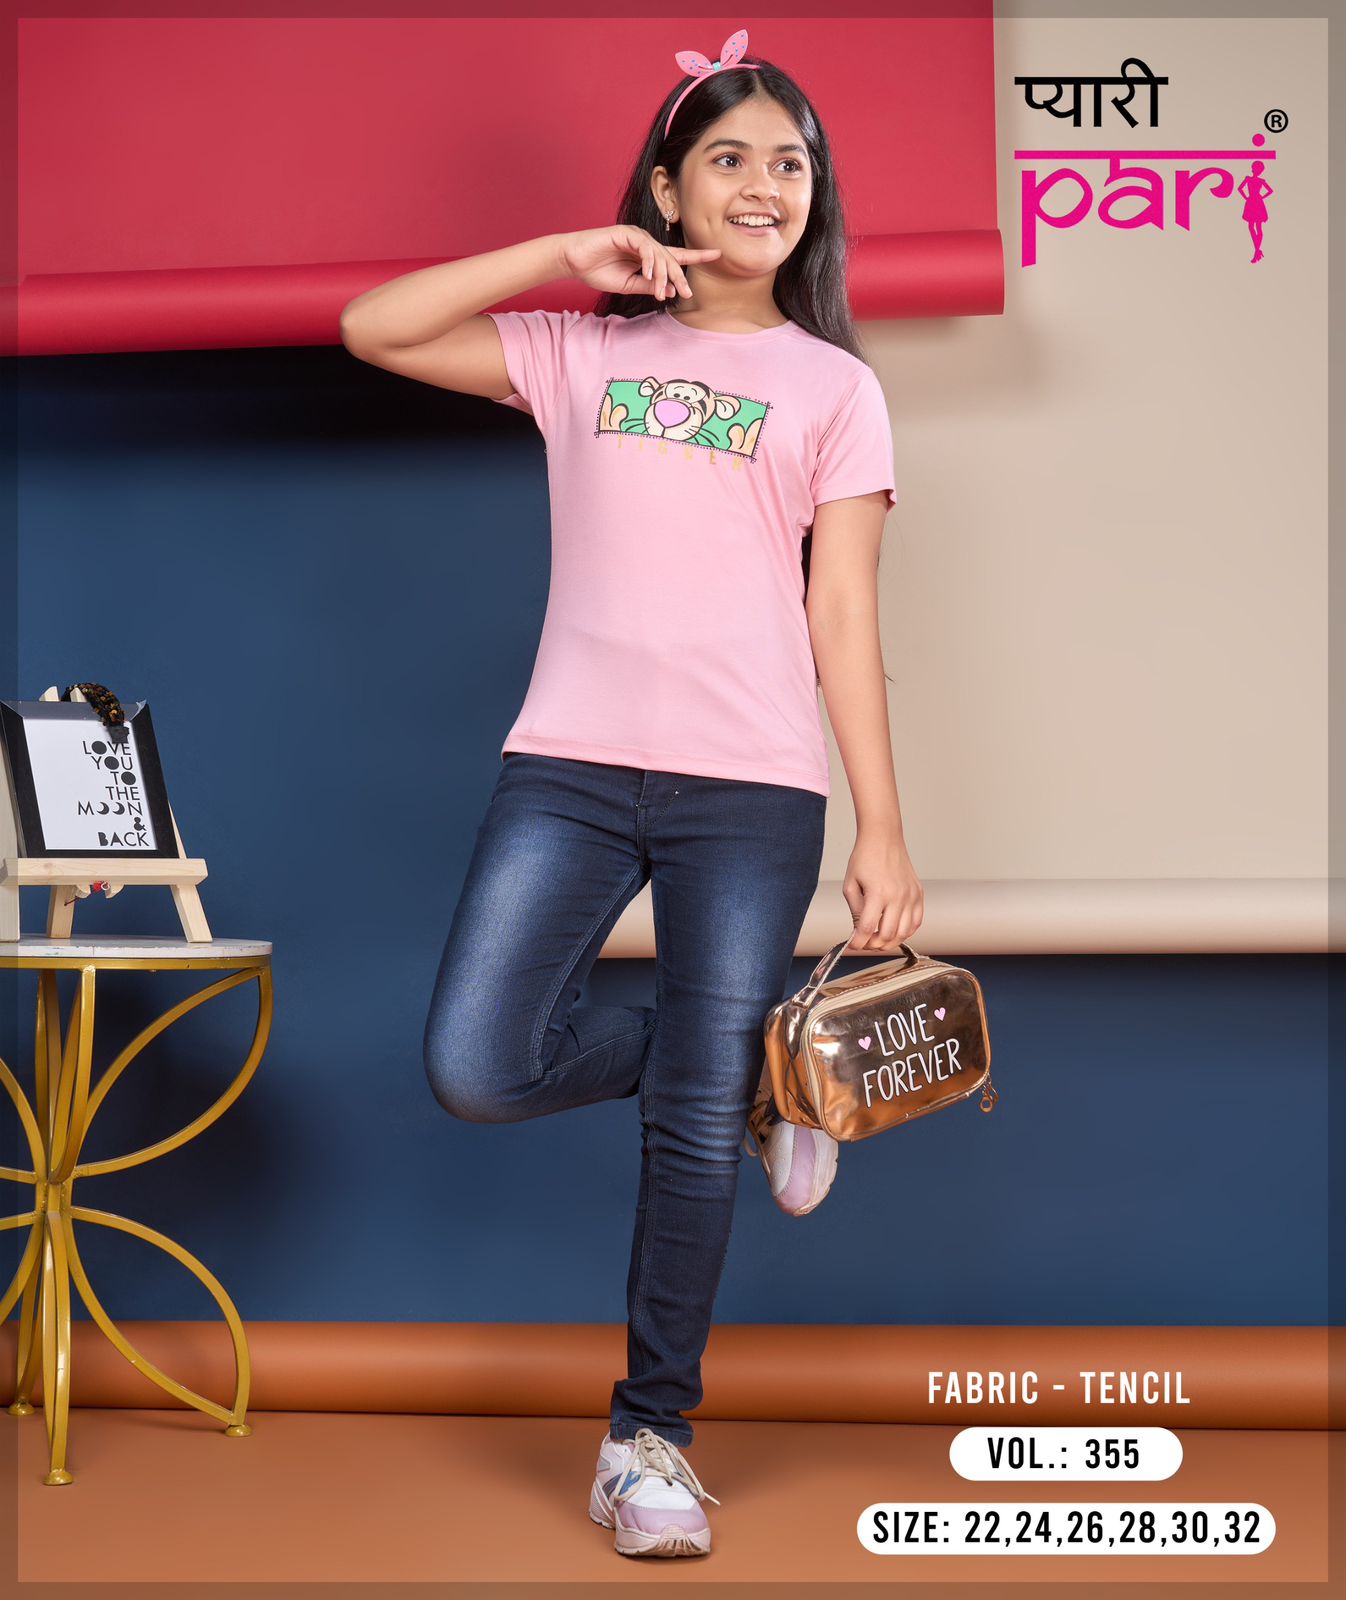 Vol 355 Pyari Pari Girls Tshirt